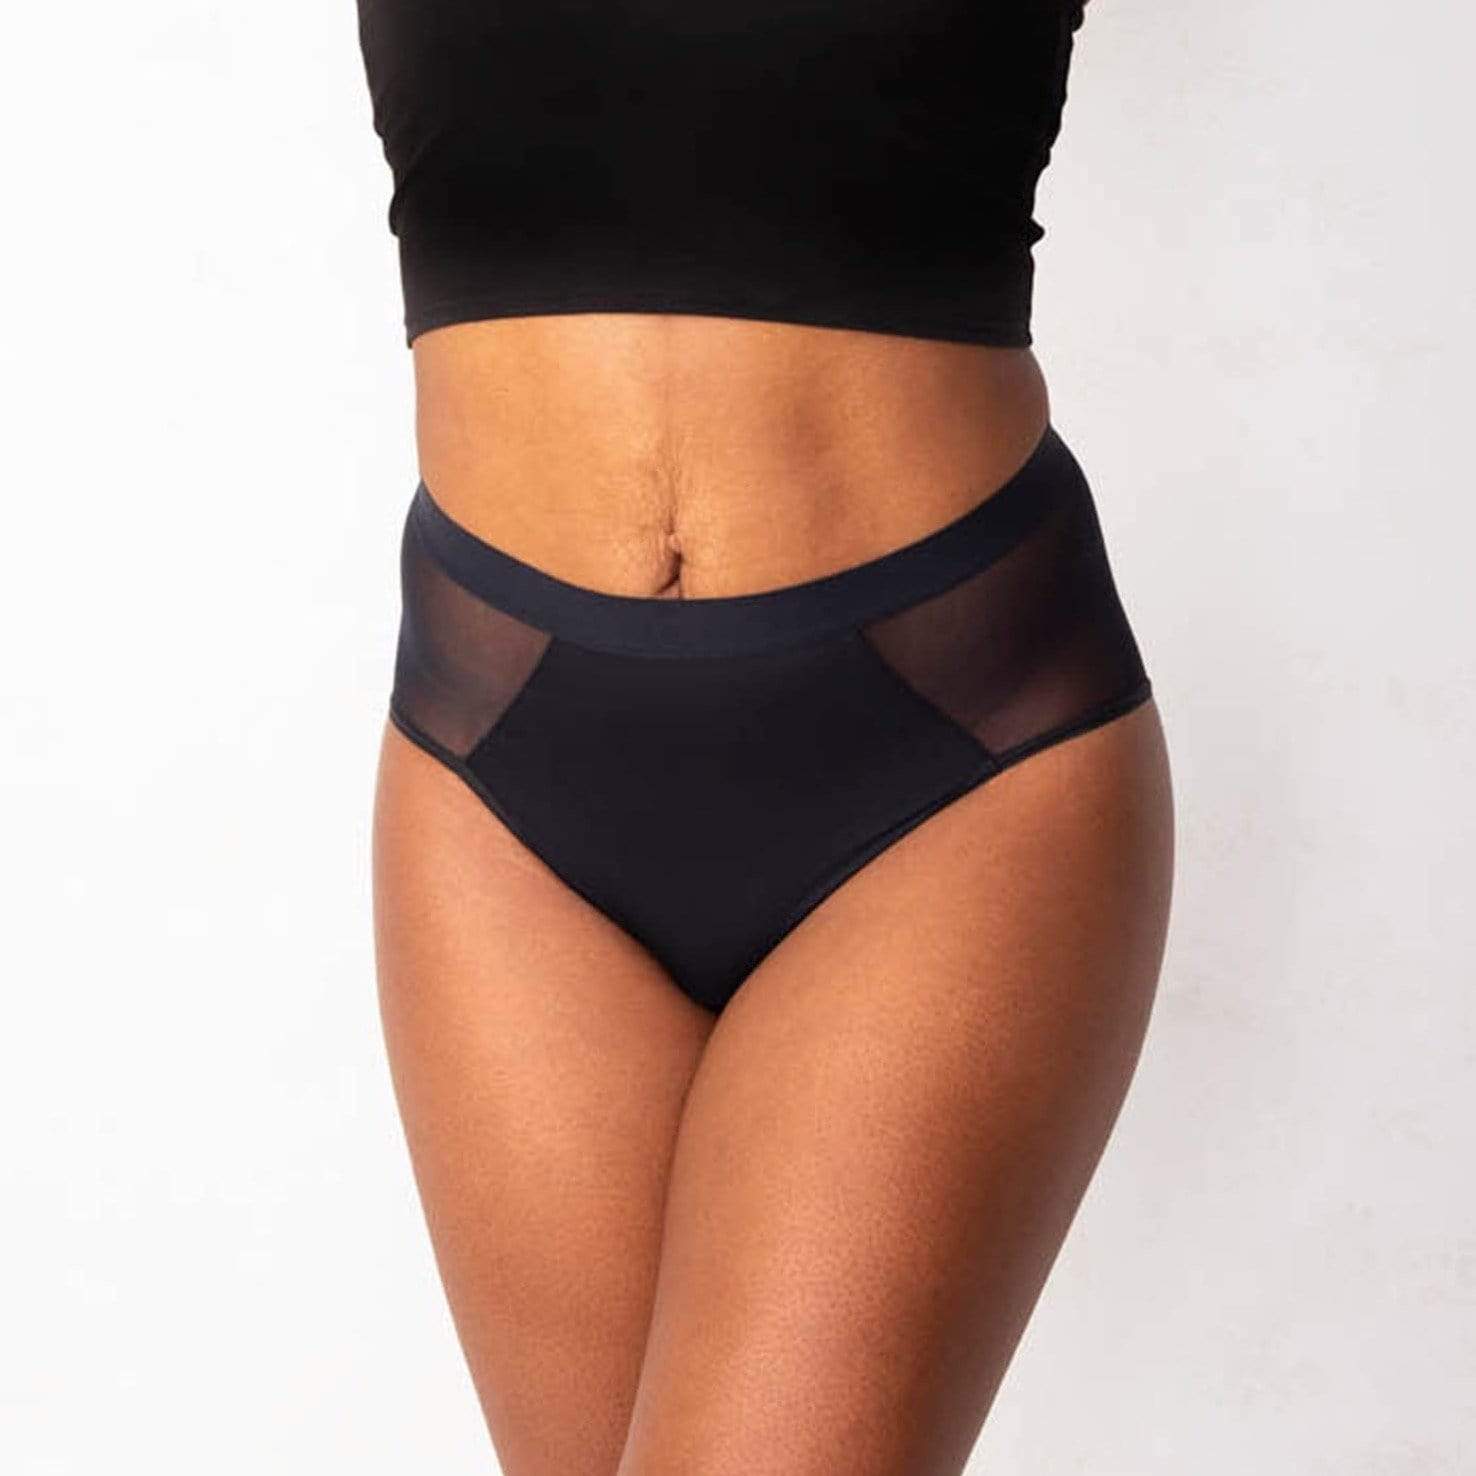 Saalt Period Underwear- Bikini- Leakproof, High Absorbency, Recycled